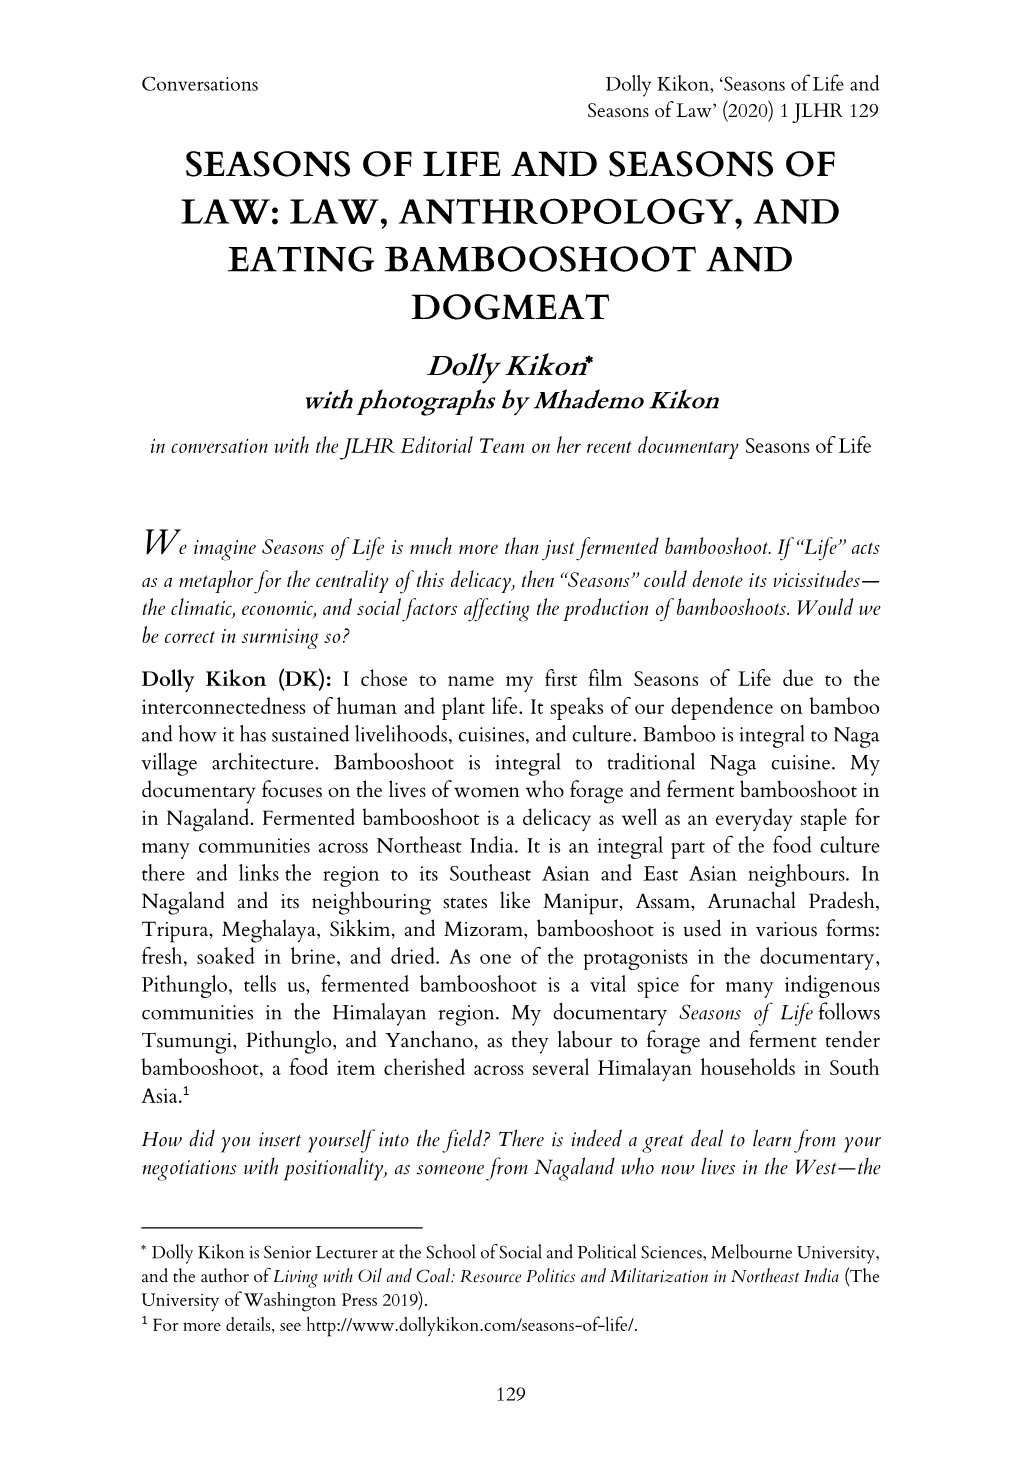 LAW, ANTHROPOLOGY, and EATING BAMBOOSHOOT and DOGMEAT Dolly Kikon with Photographs by Mhademo Kikon